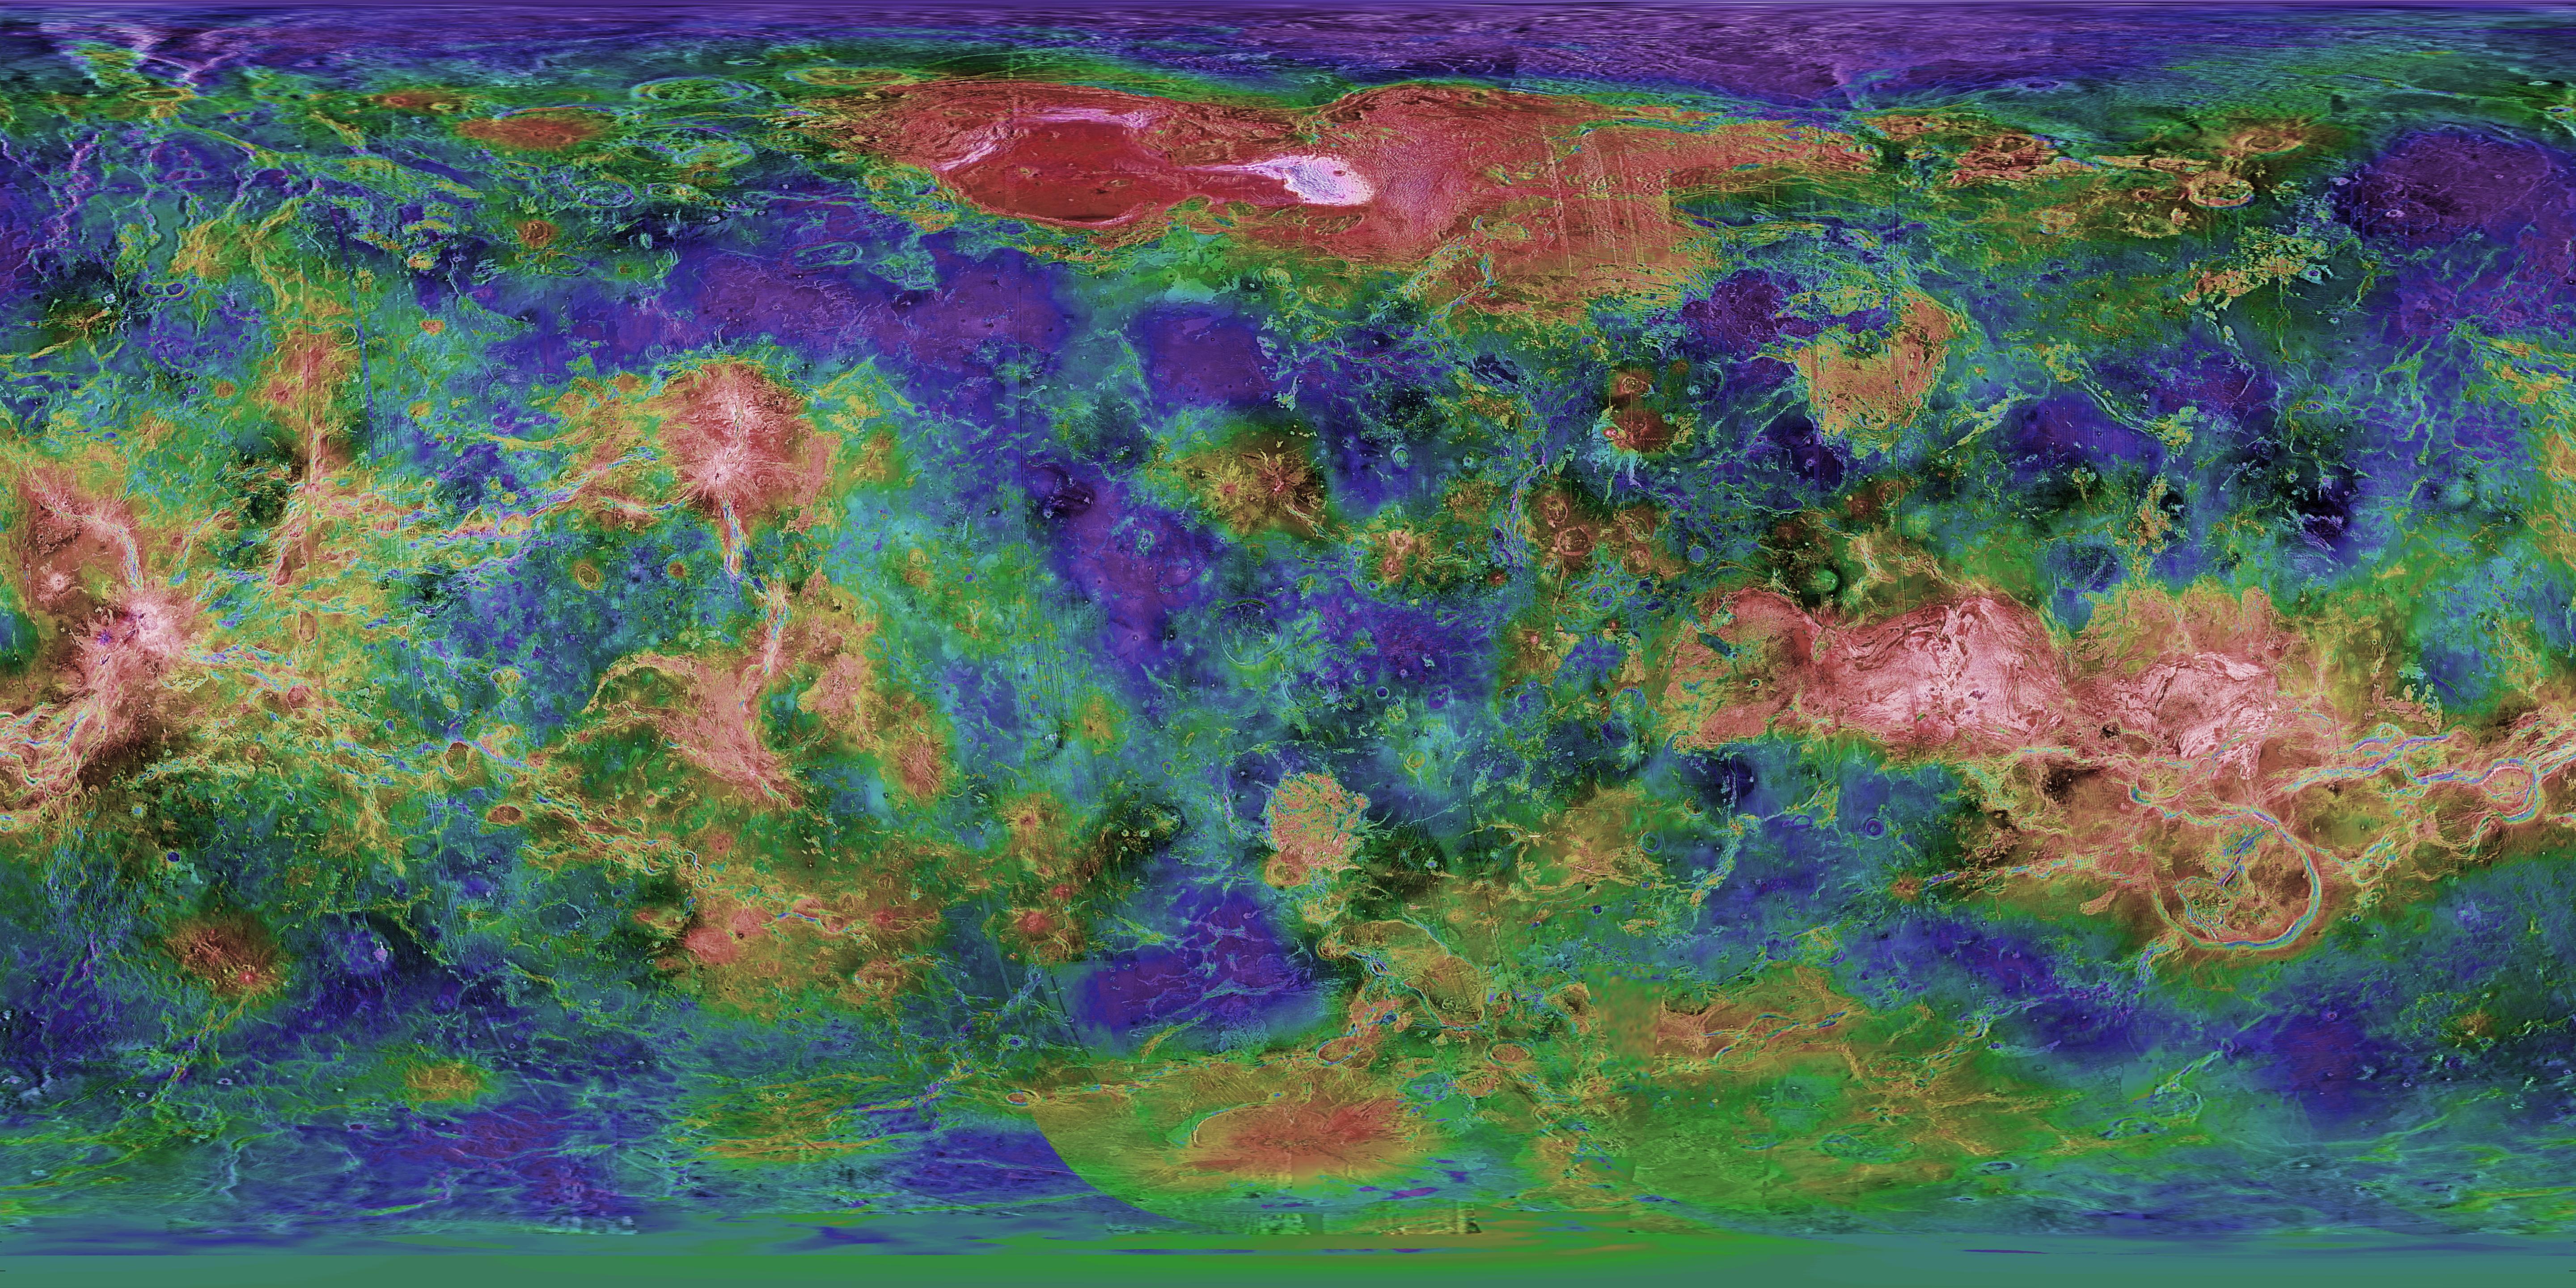 A topographic map of Venus based on Magellan radar data